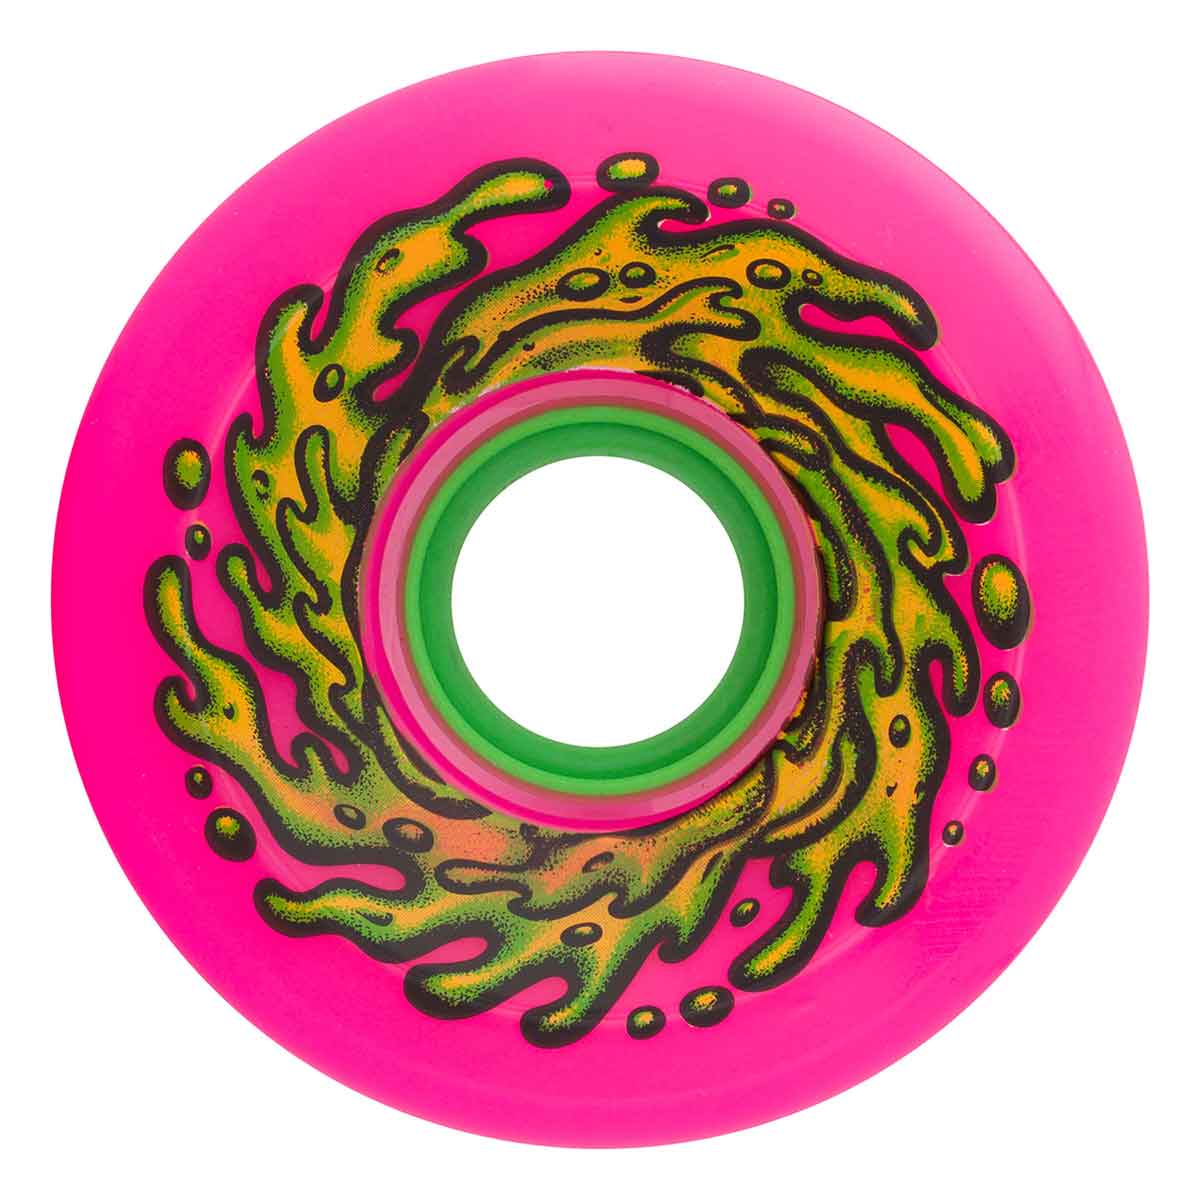 66mm OG Slime Pink 78A Skateboard Wheels Slime Balls